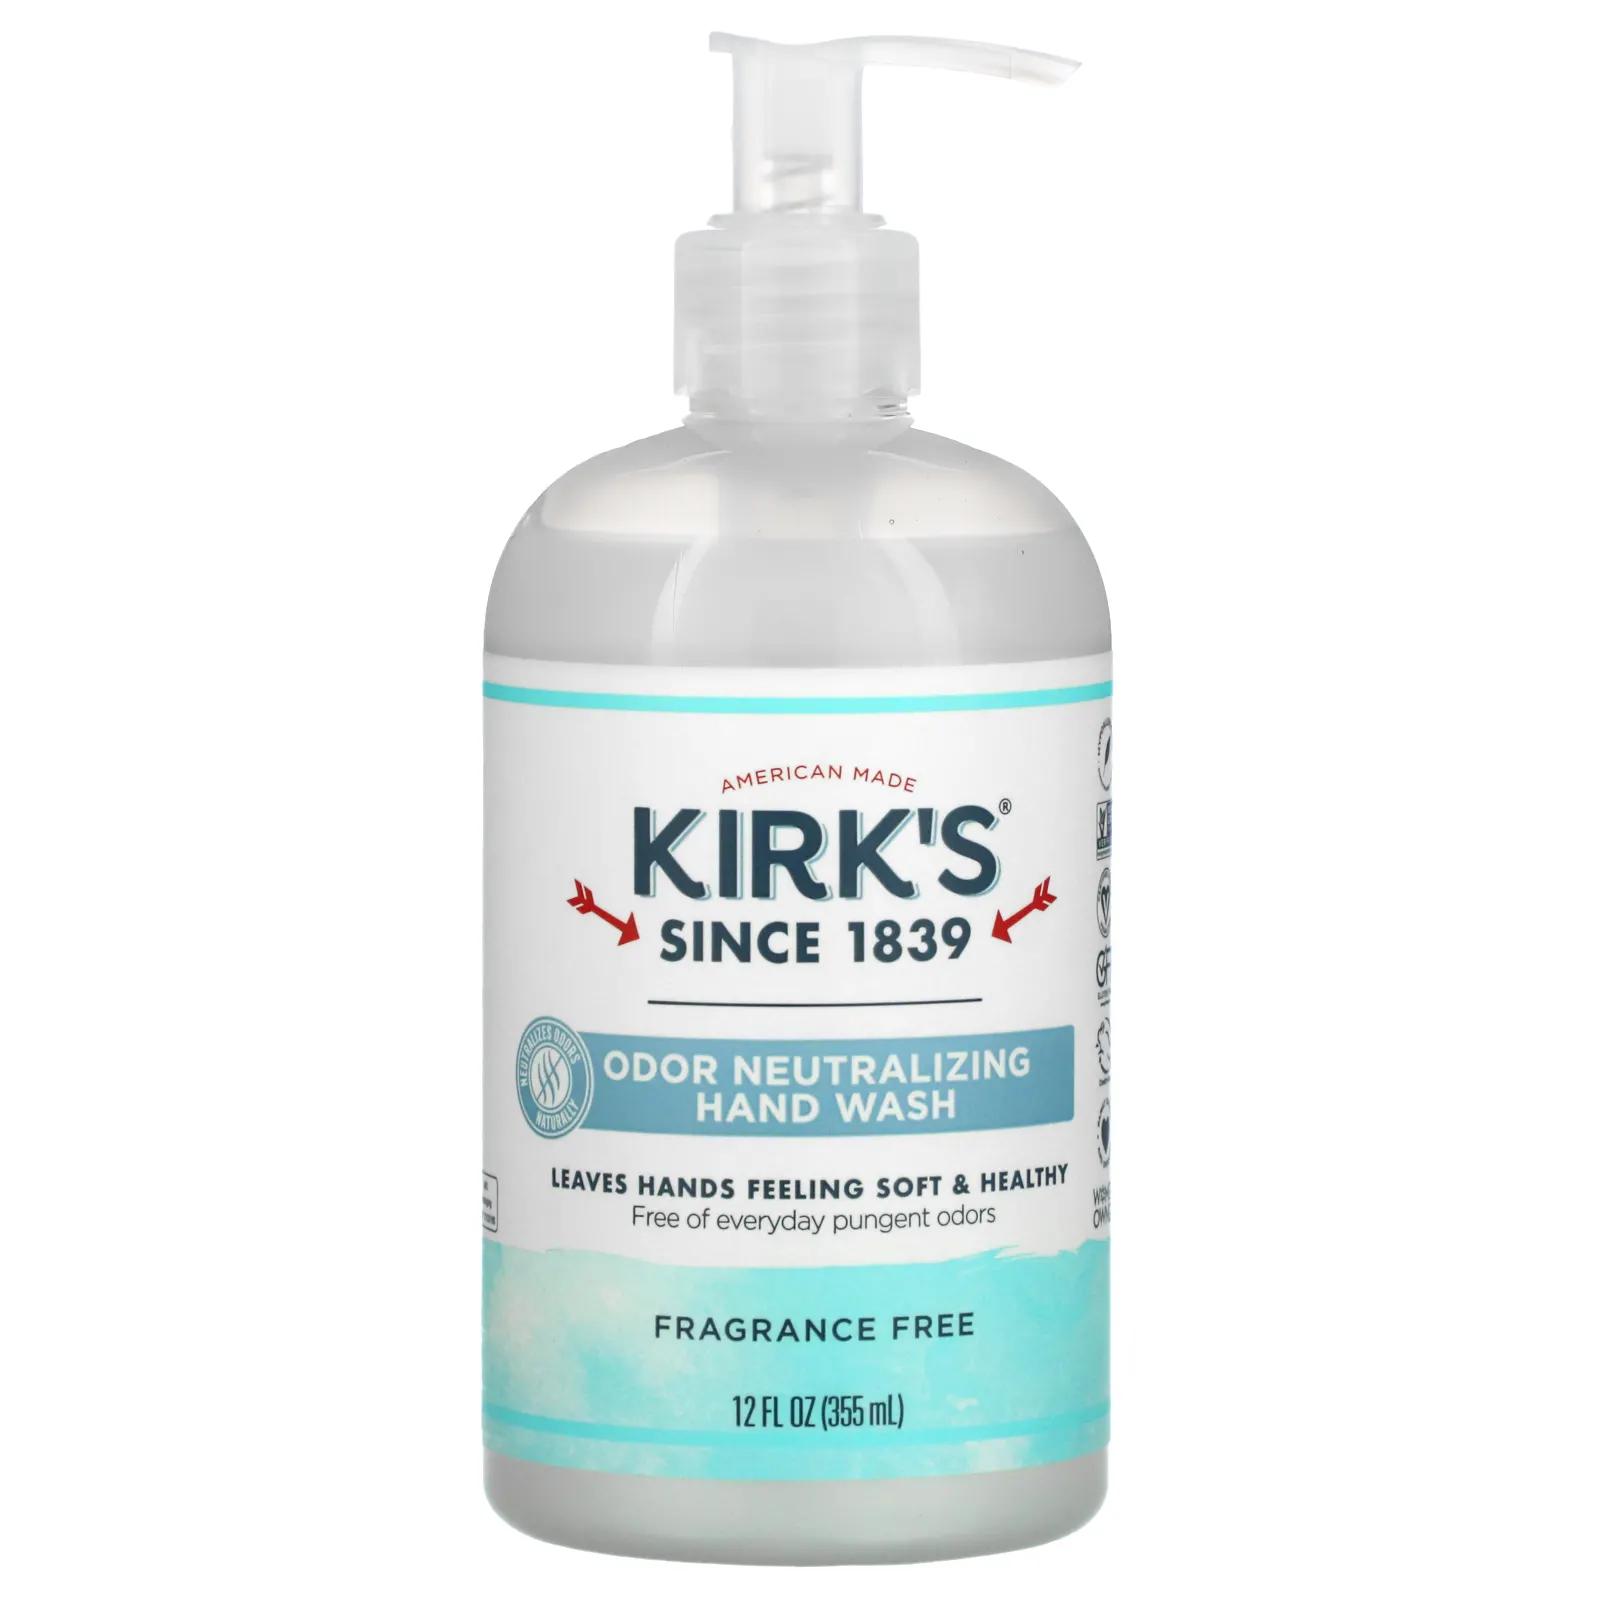 Kirk's Odor Neutralizing Hand Wash Fragrance Free 12 fl oz (355 ml)